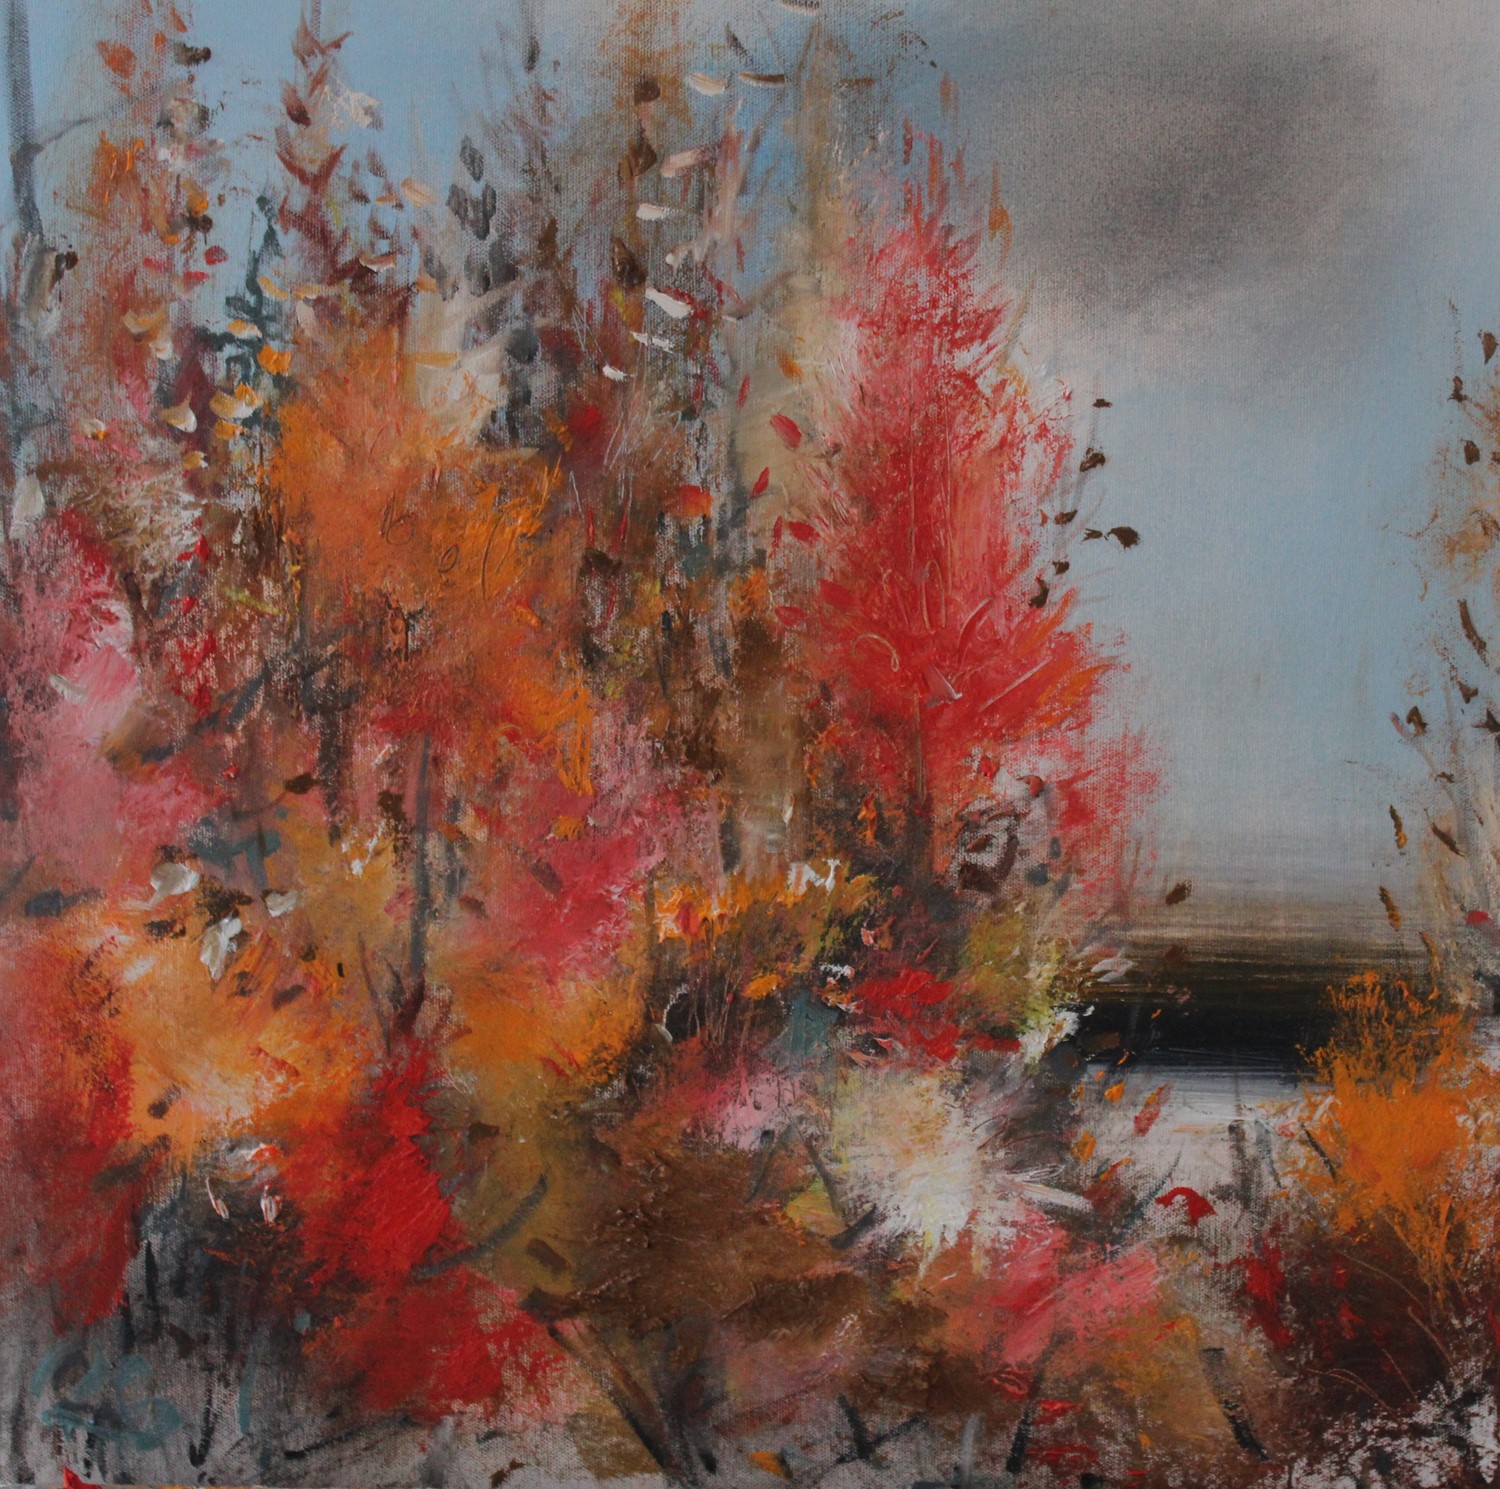 'Little Woodland in Autumn' by artist Rosanne Barr